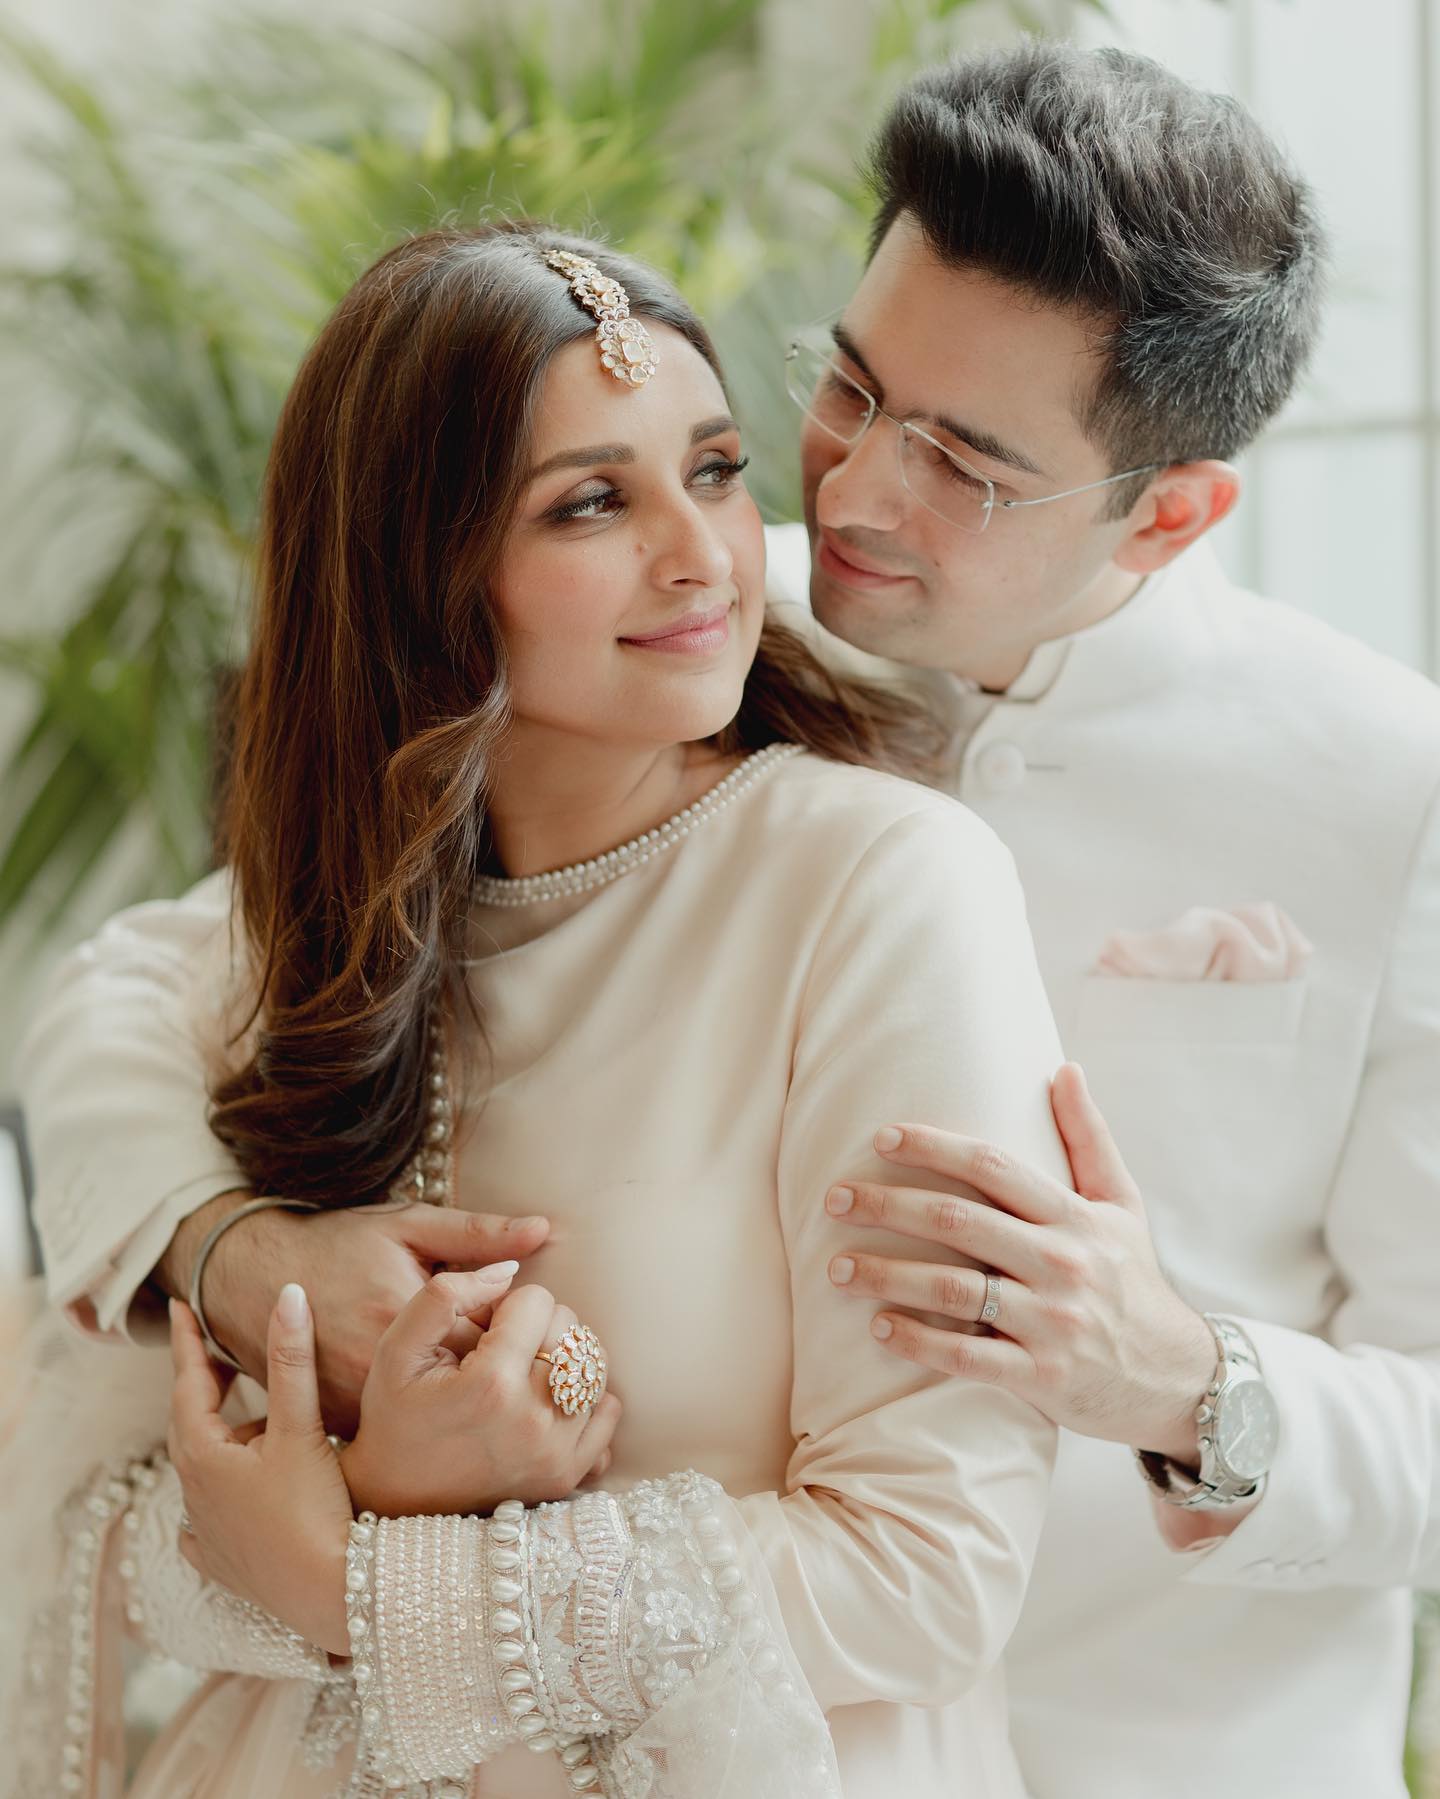 Exclusive: Parineeti Chopra & Raghav Chadha Wedding & Reception Venue Revealed!